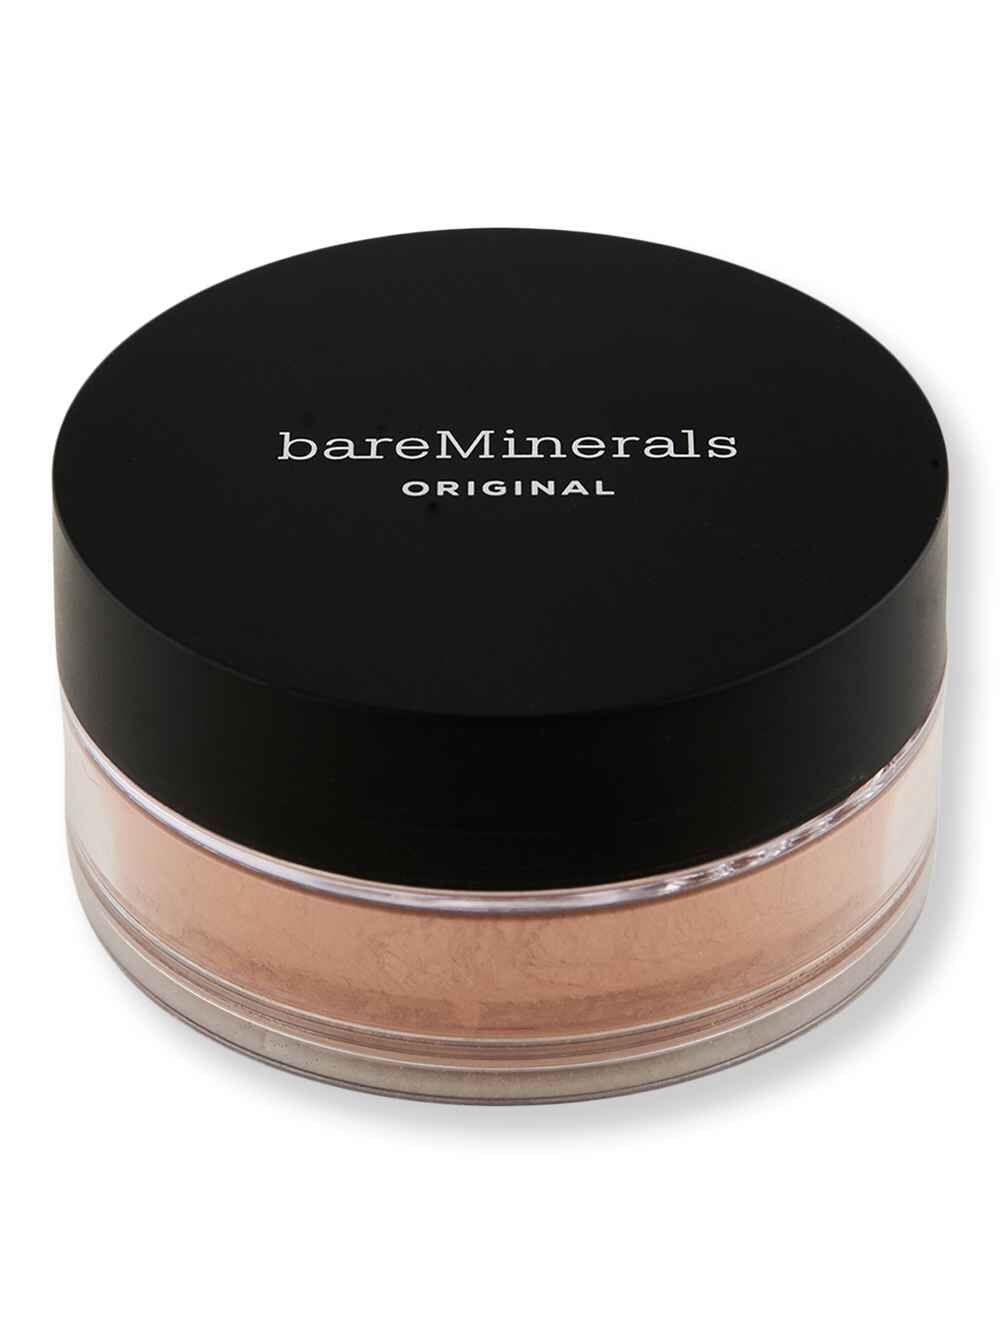 Bareminerals Bareminerals Original Loose Powder Foundation SPF 15 Neutral Deep 29 0.28 oz8 g Tinted Moisturizers & Foundations 